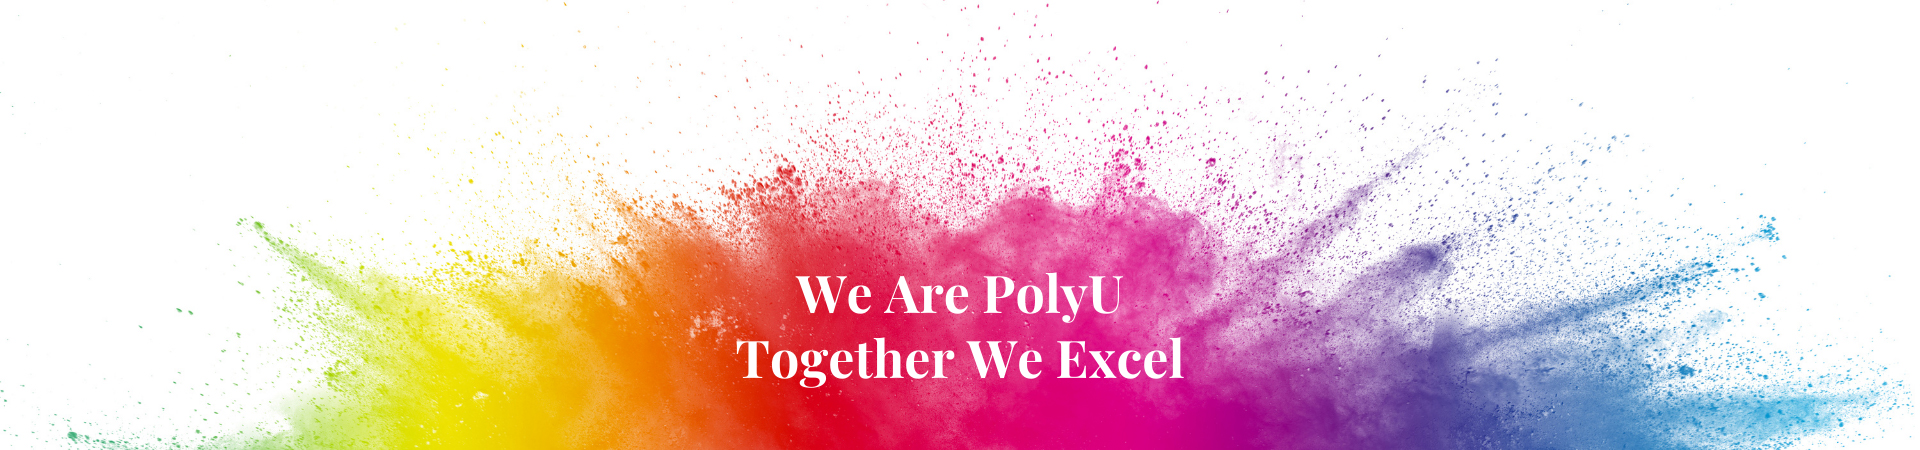 We are PolyU.  Together We Excel.